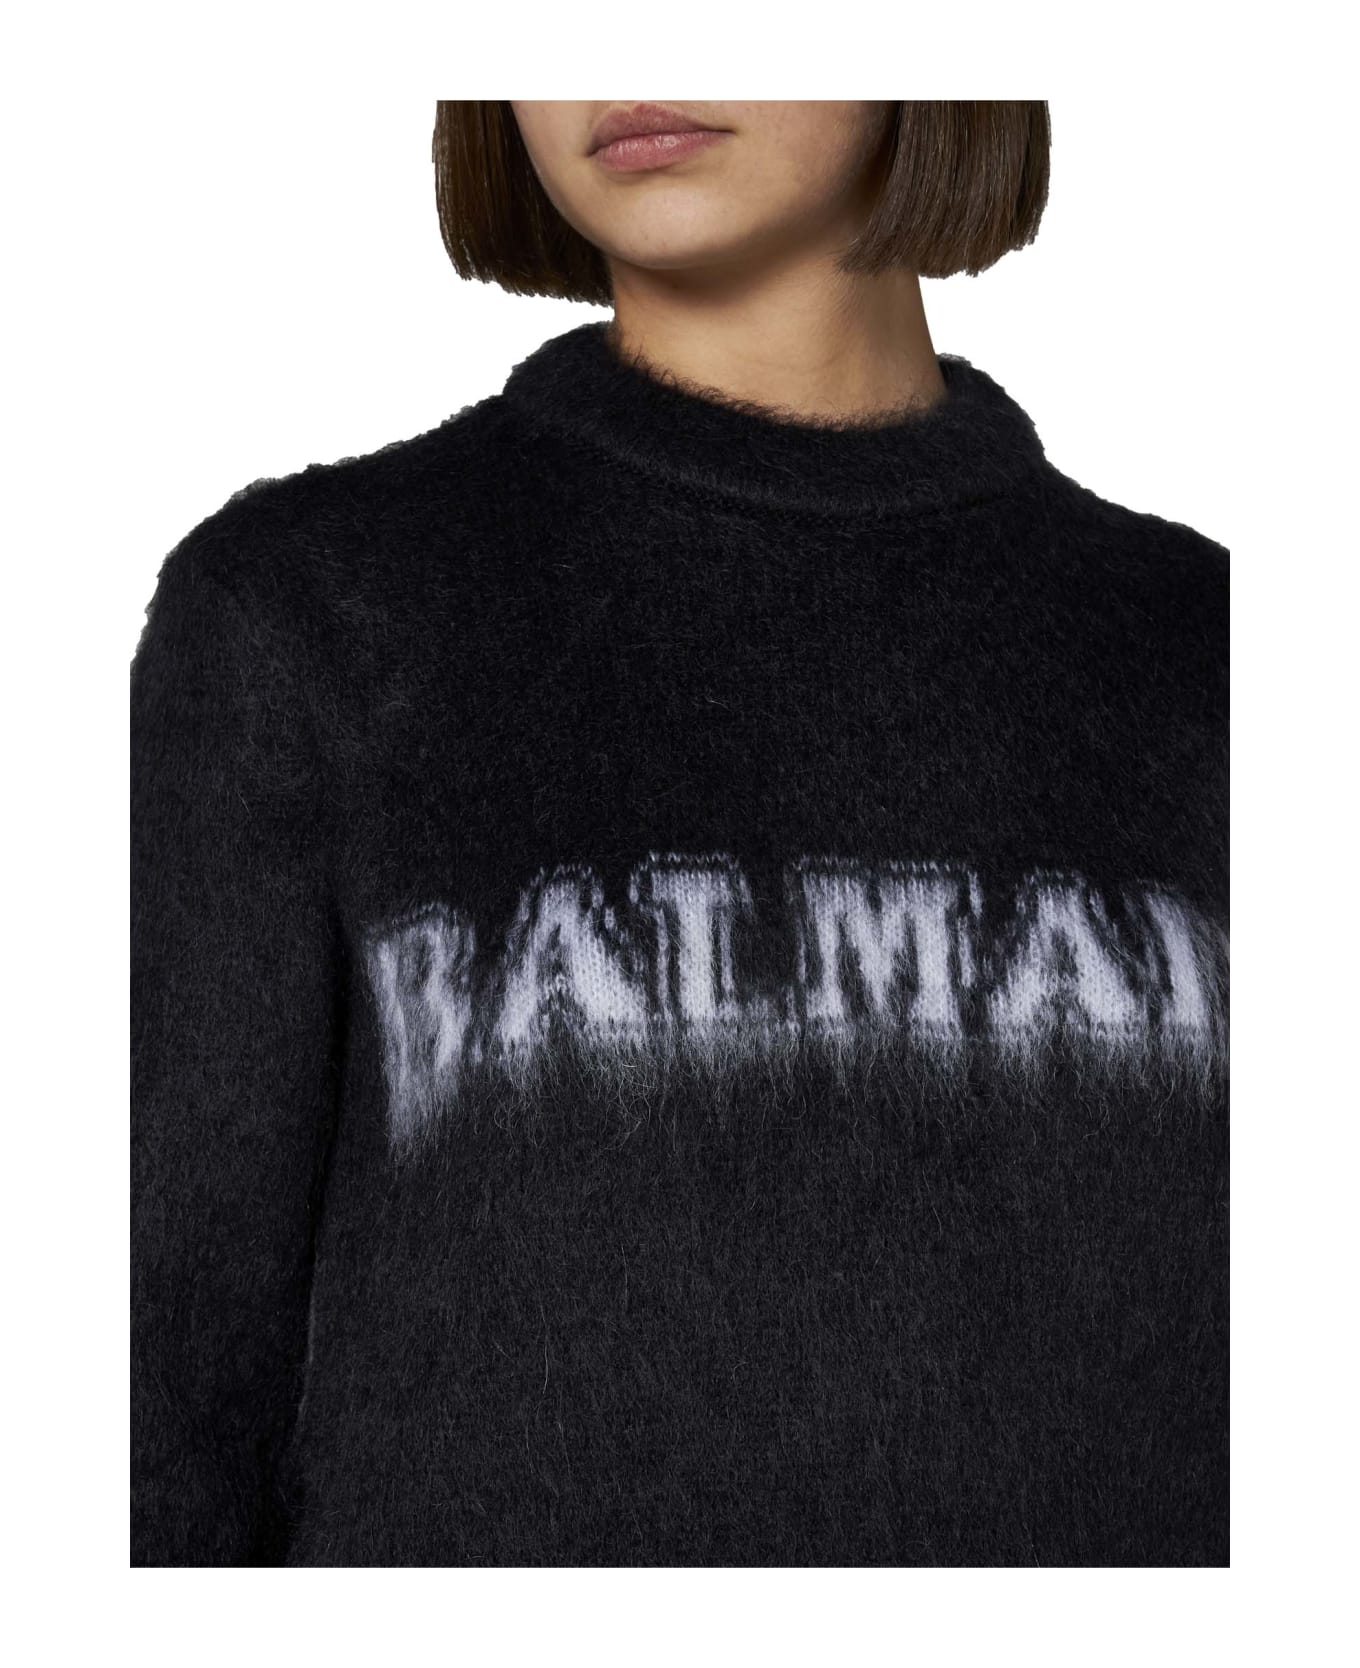 Balmain Sweater - Noir blanc